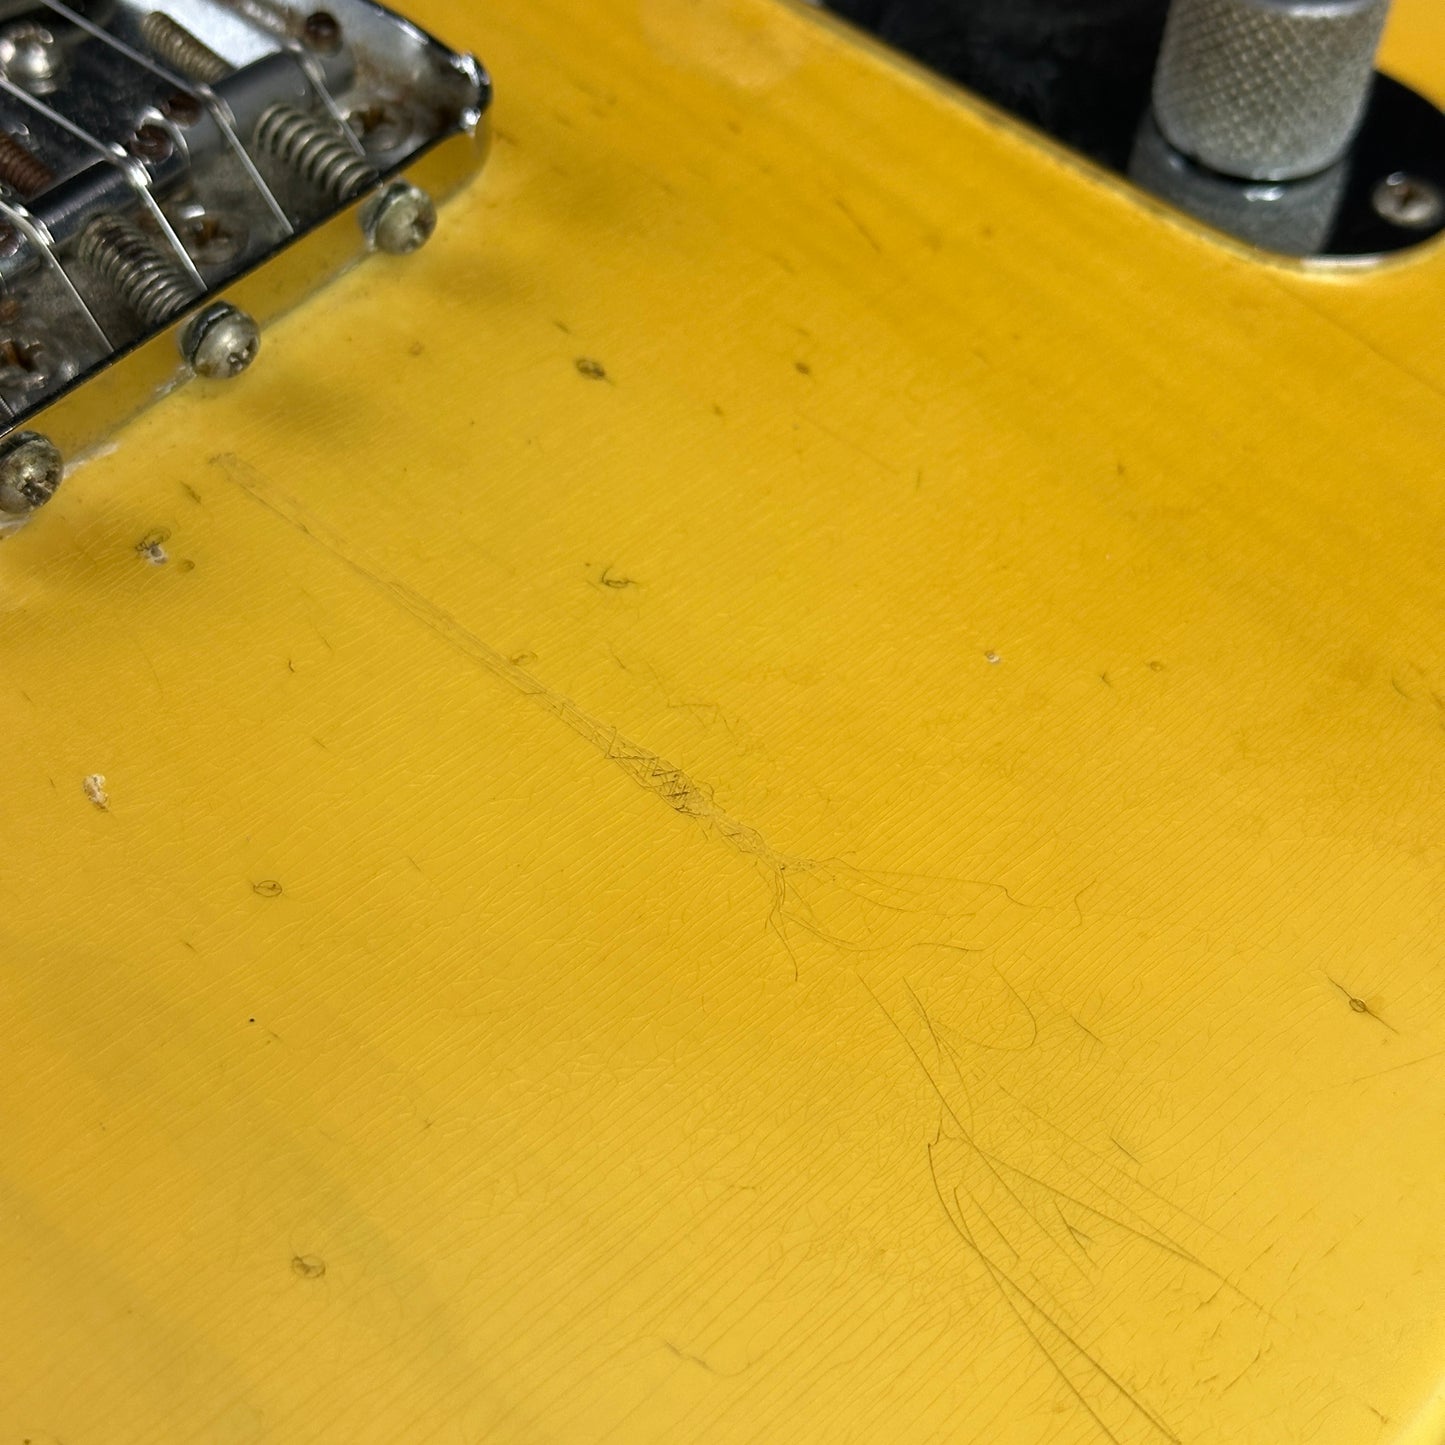 Damage near bridge of Vintage 1974 Fender Telecaster.